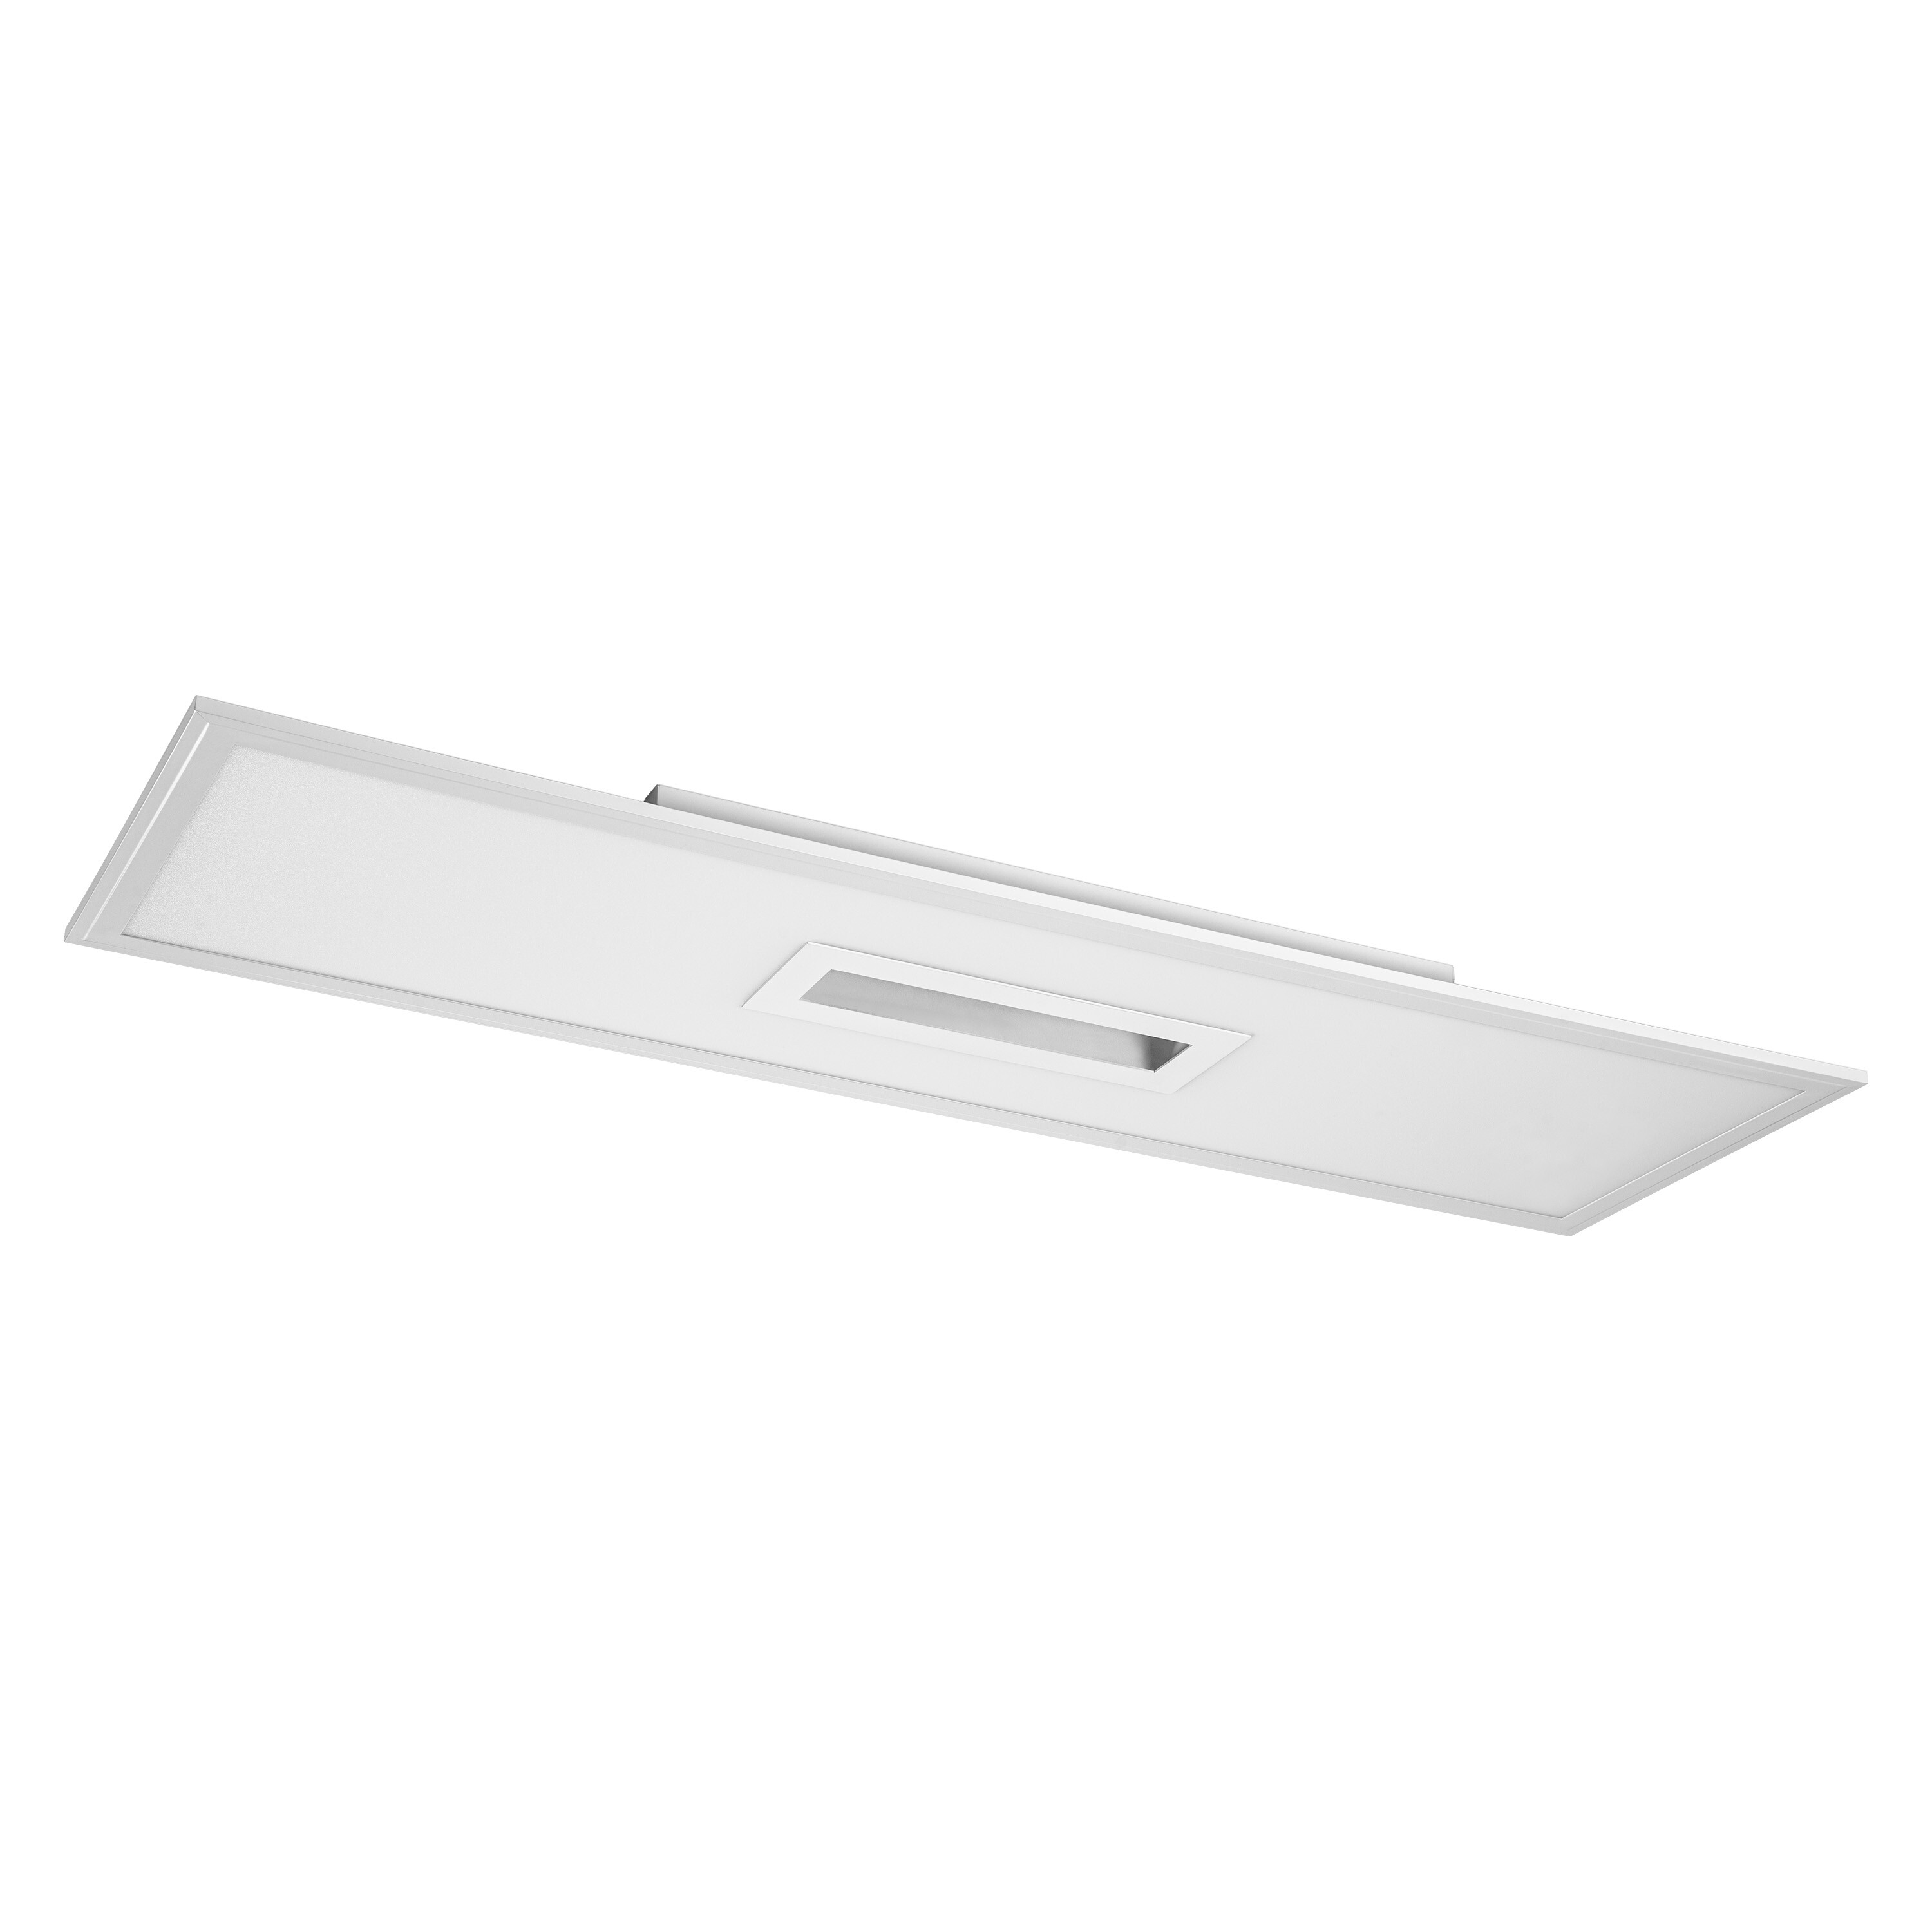 LEDVANCE SMART+ Planon Plus Backlight White,RGB Tunable Smarte WiFi technology Leuchte with